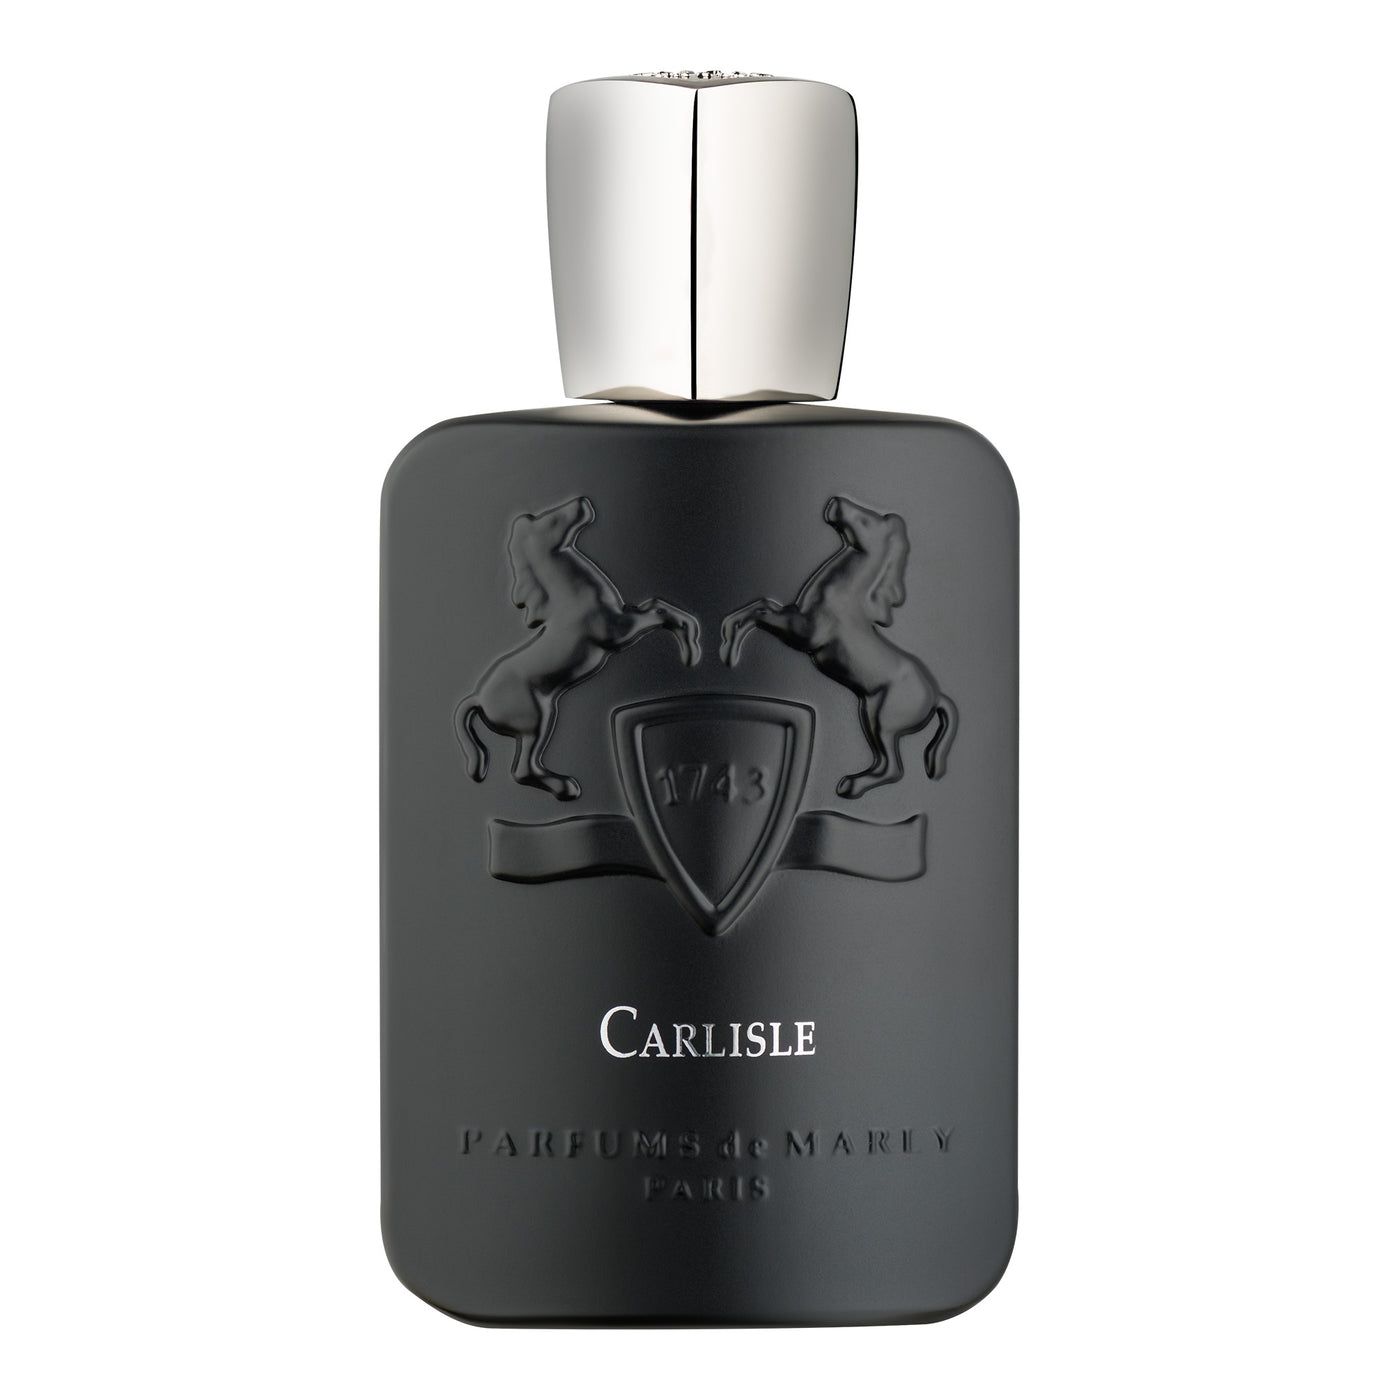 Parfums de Marly Carlisle - 125ml - Gharyal by Collectibles 